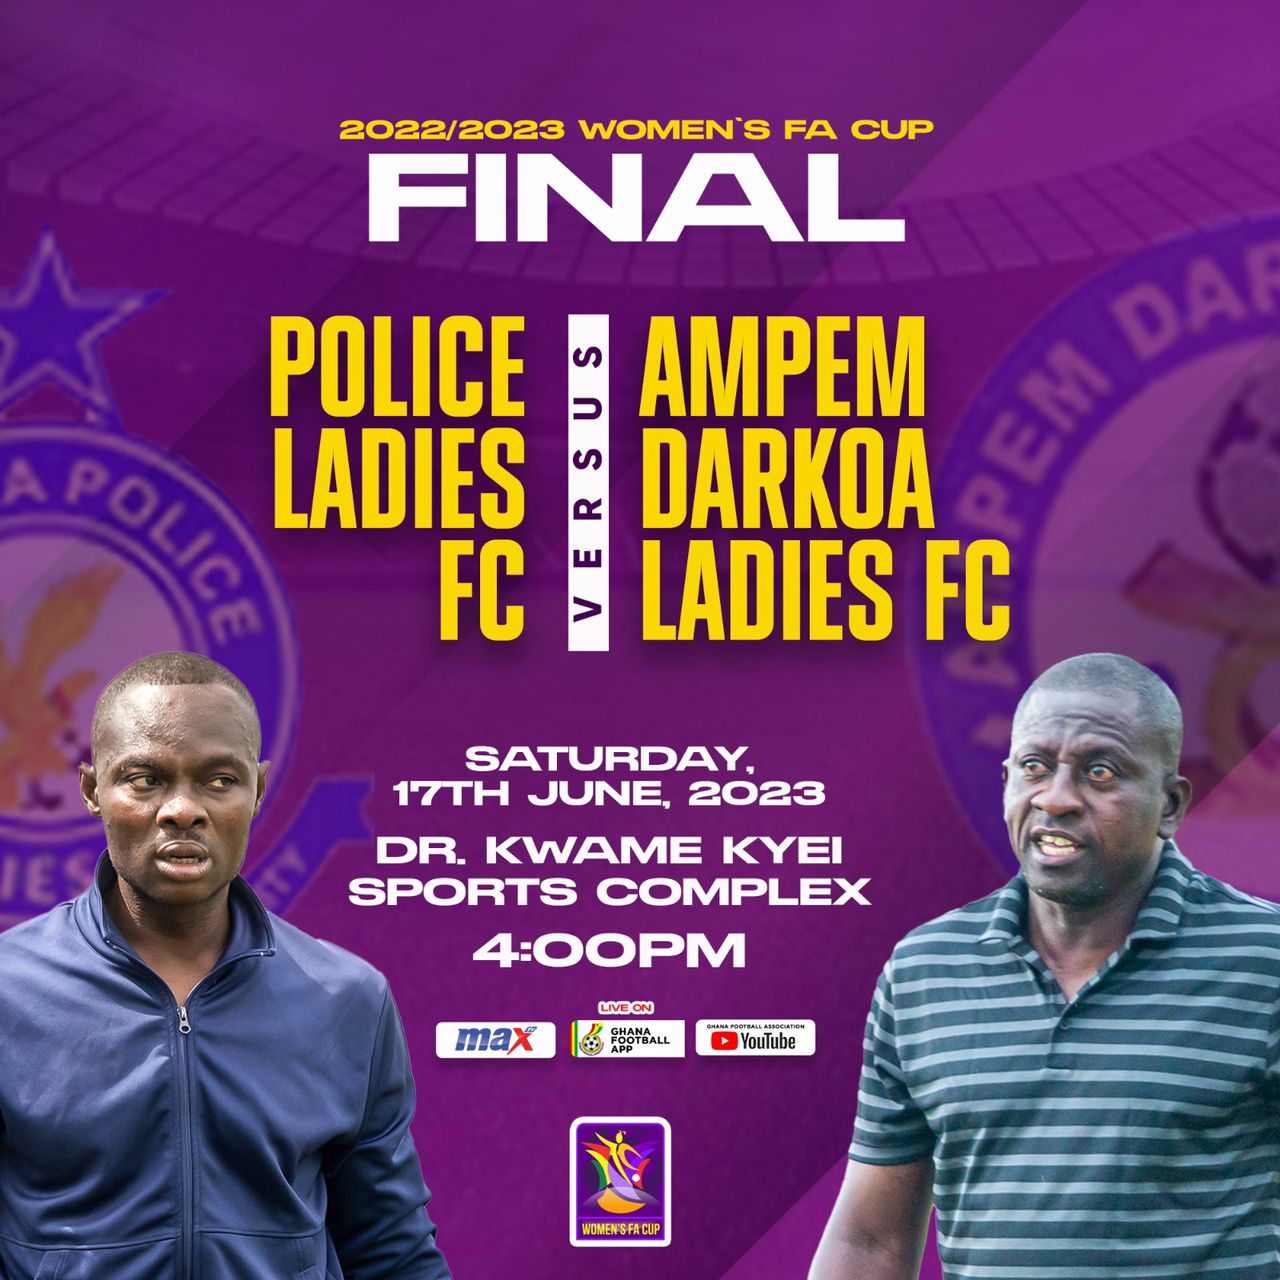 Women's FA Cup final: Police Ladies square off with Ampem Darkoa Ladies Saturday